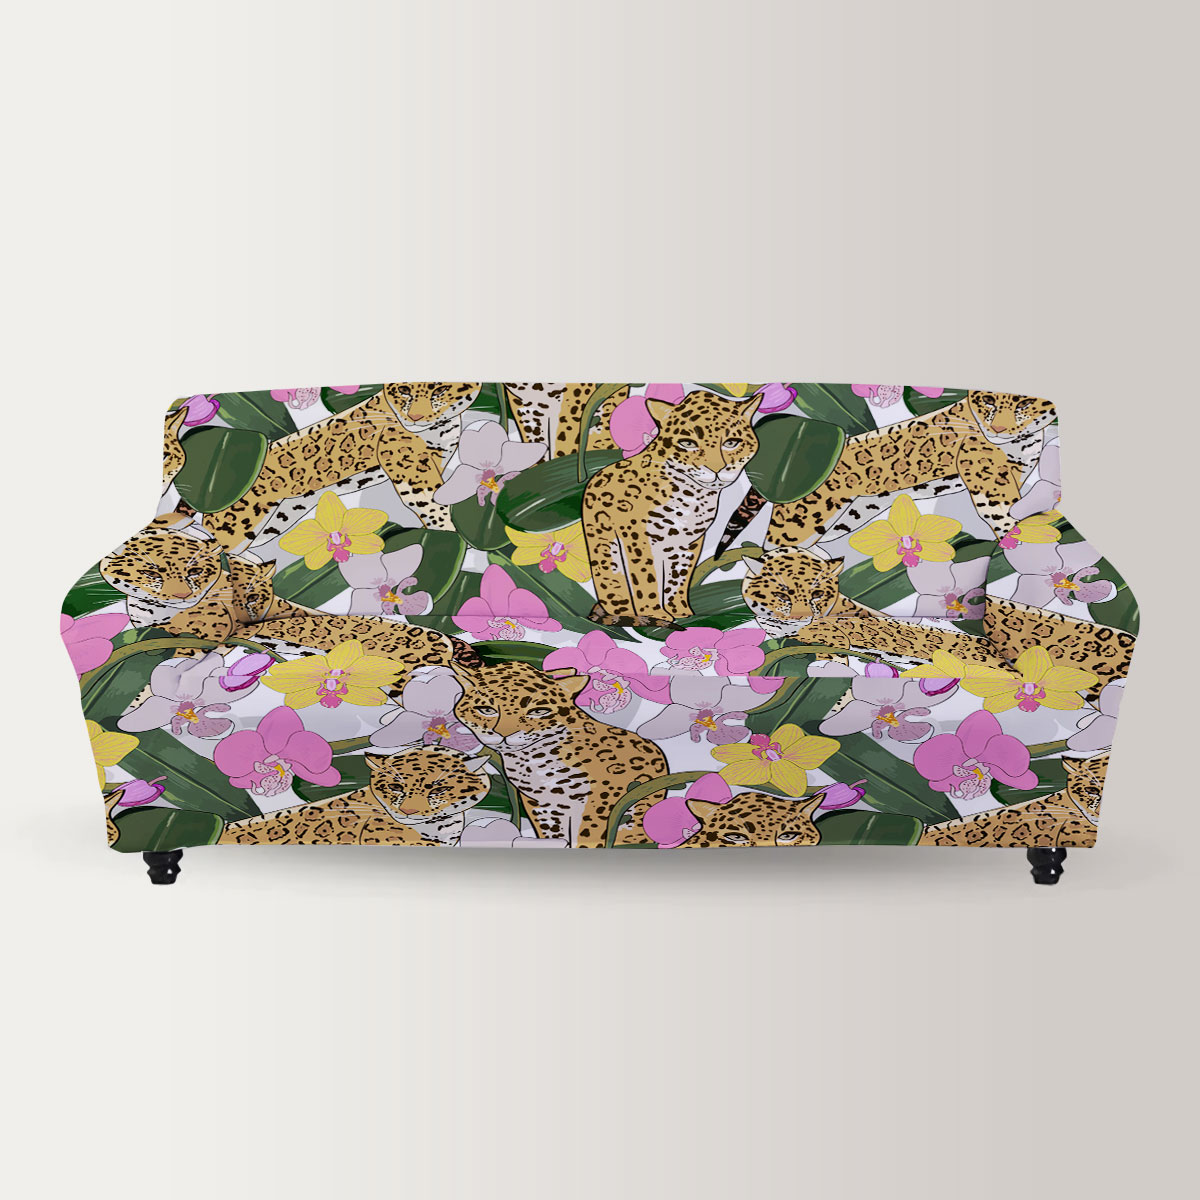 Floral Jaguar Sofa Cover